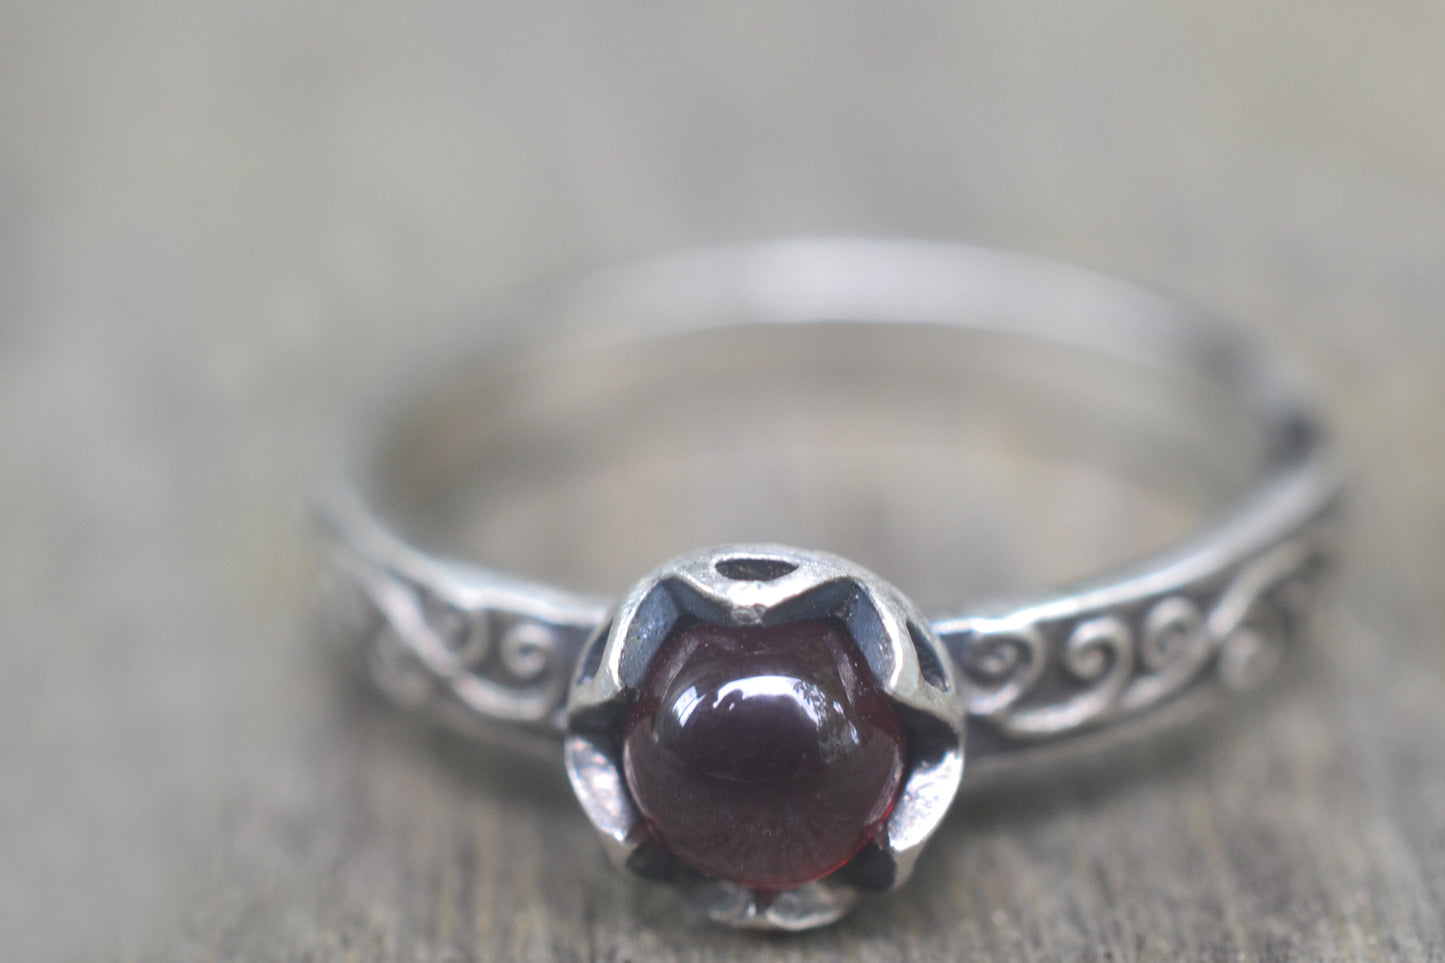 5mm Garnet Gemstone Ring With Swirl Band